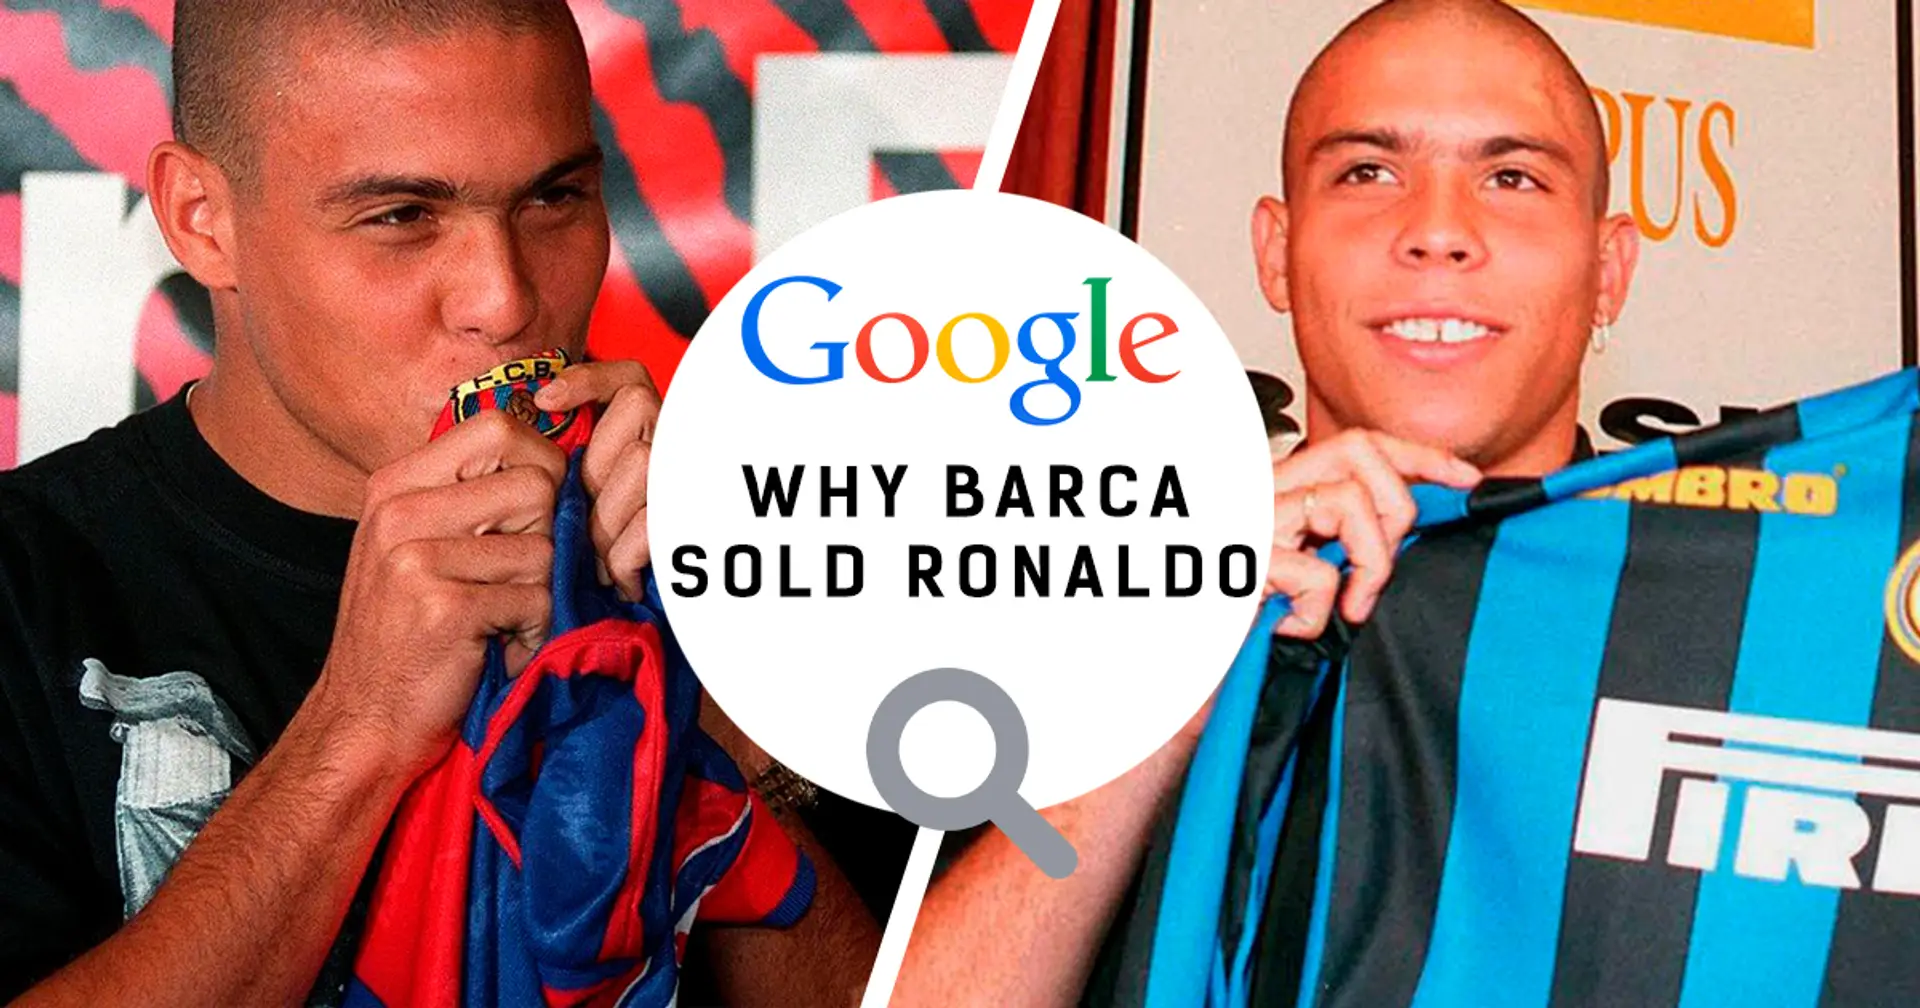 Why Barca sold Ronaldo? Answered